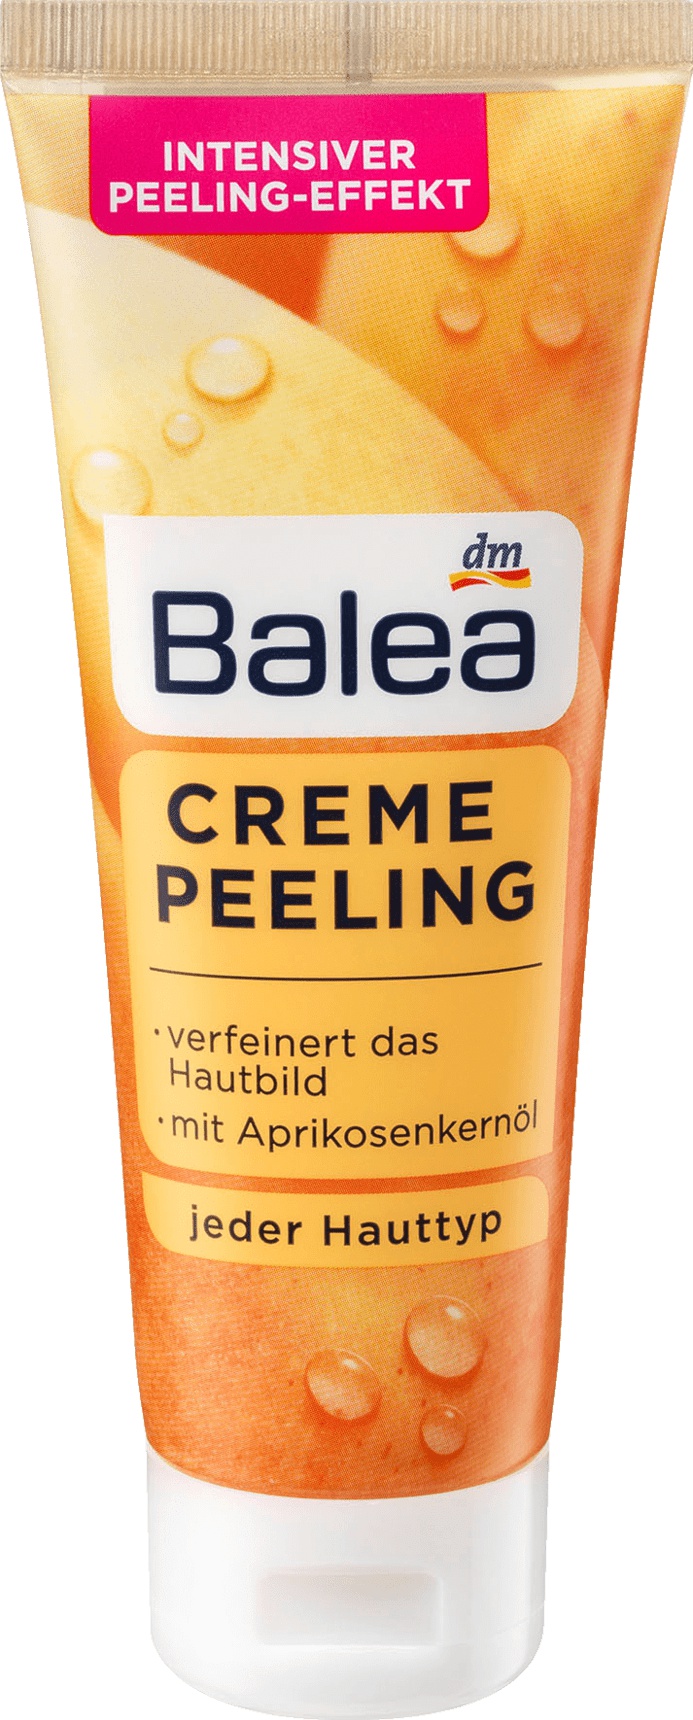 Balea Urea es Creme Ingredients Explained